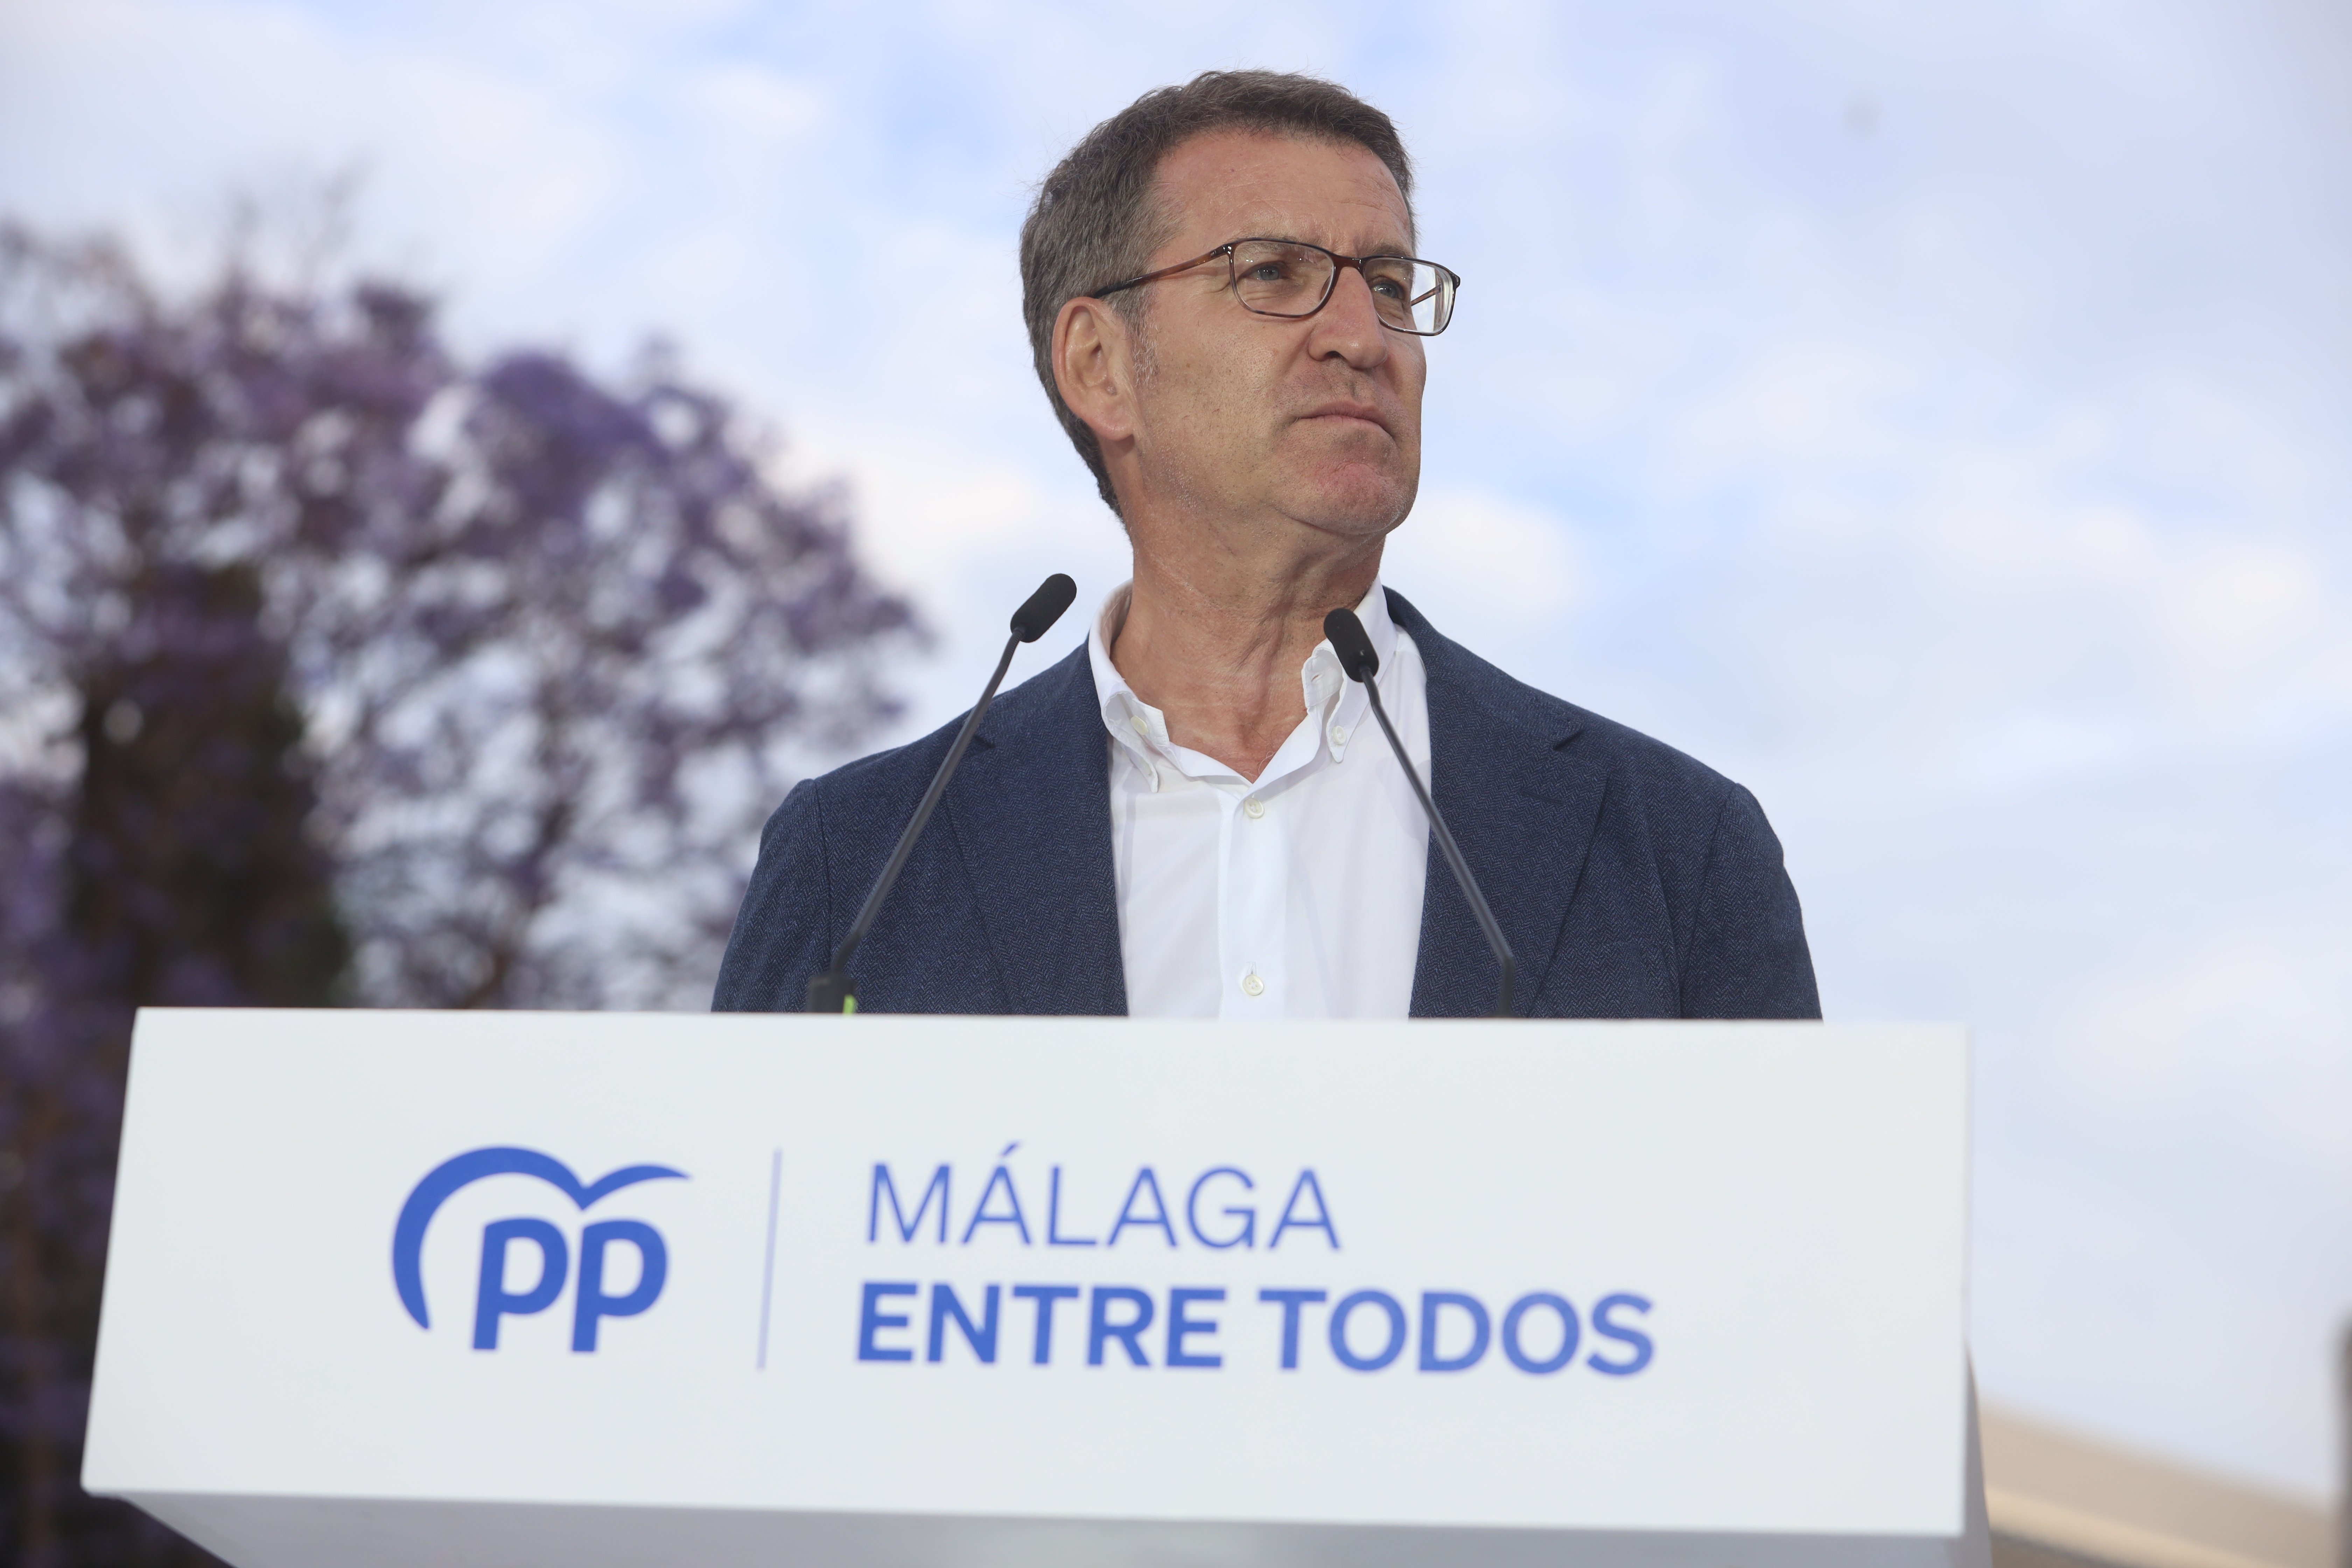 La derecha española encabeza las encuestas, pero Feijóo pierde fuelle